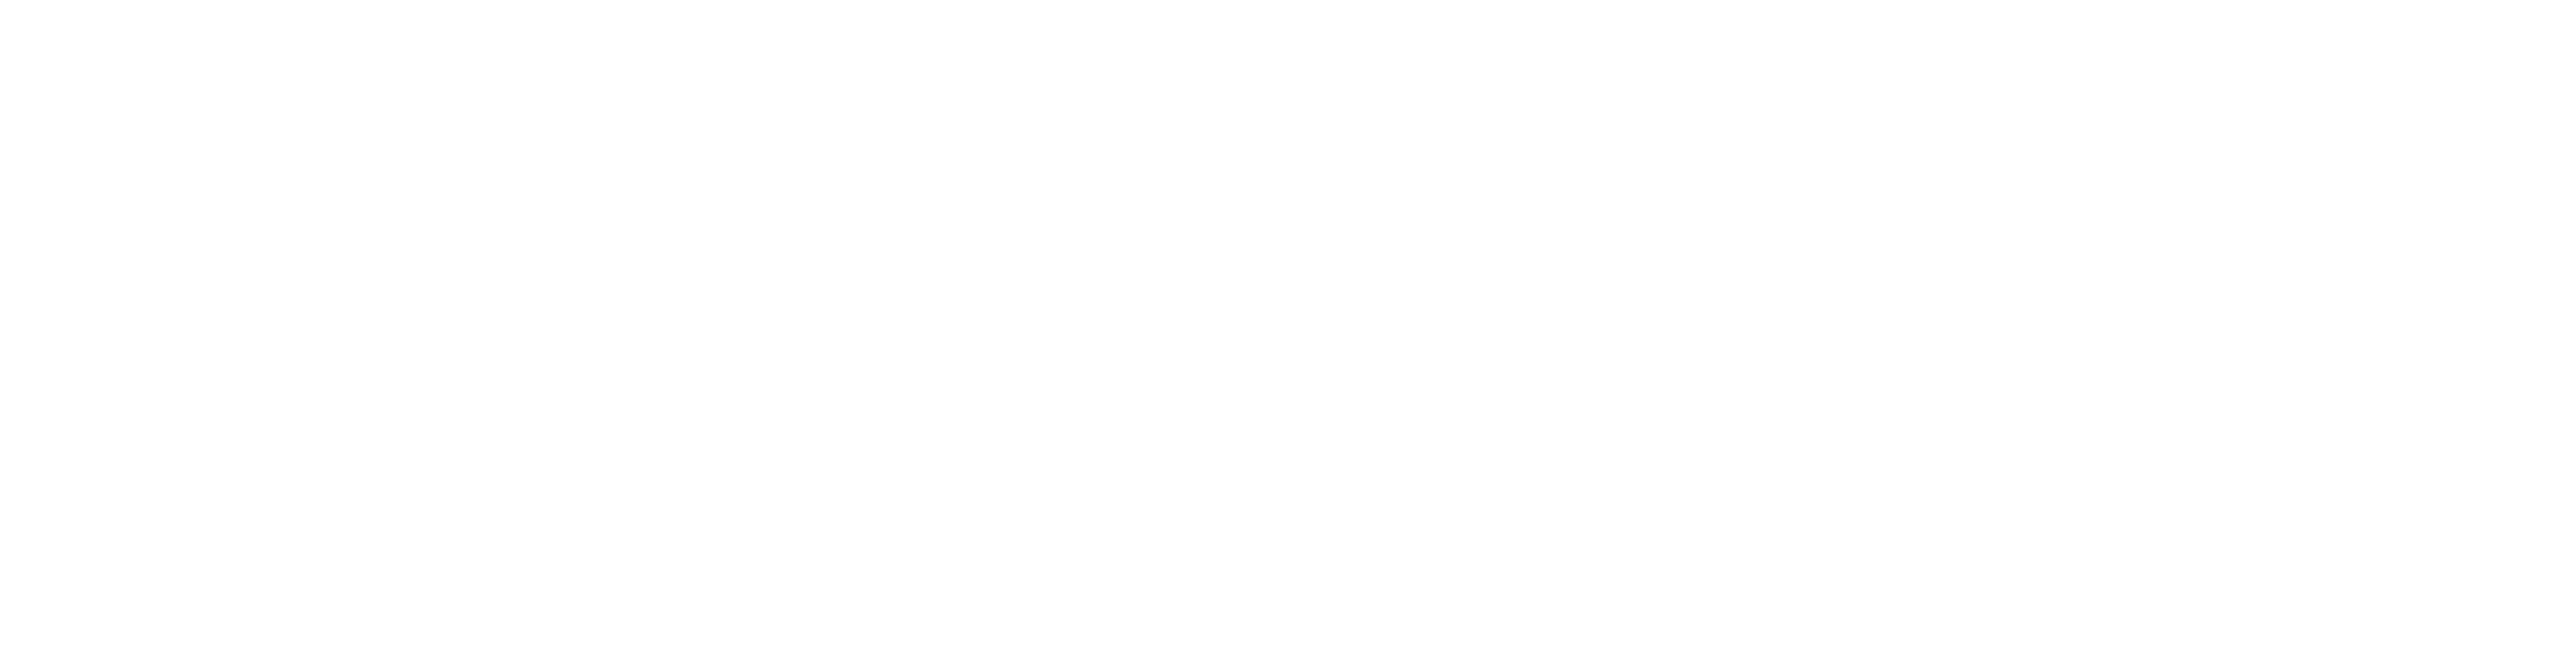 Inner Circle of Friends Logo August 2021 ffffff